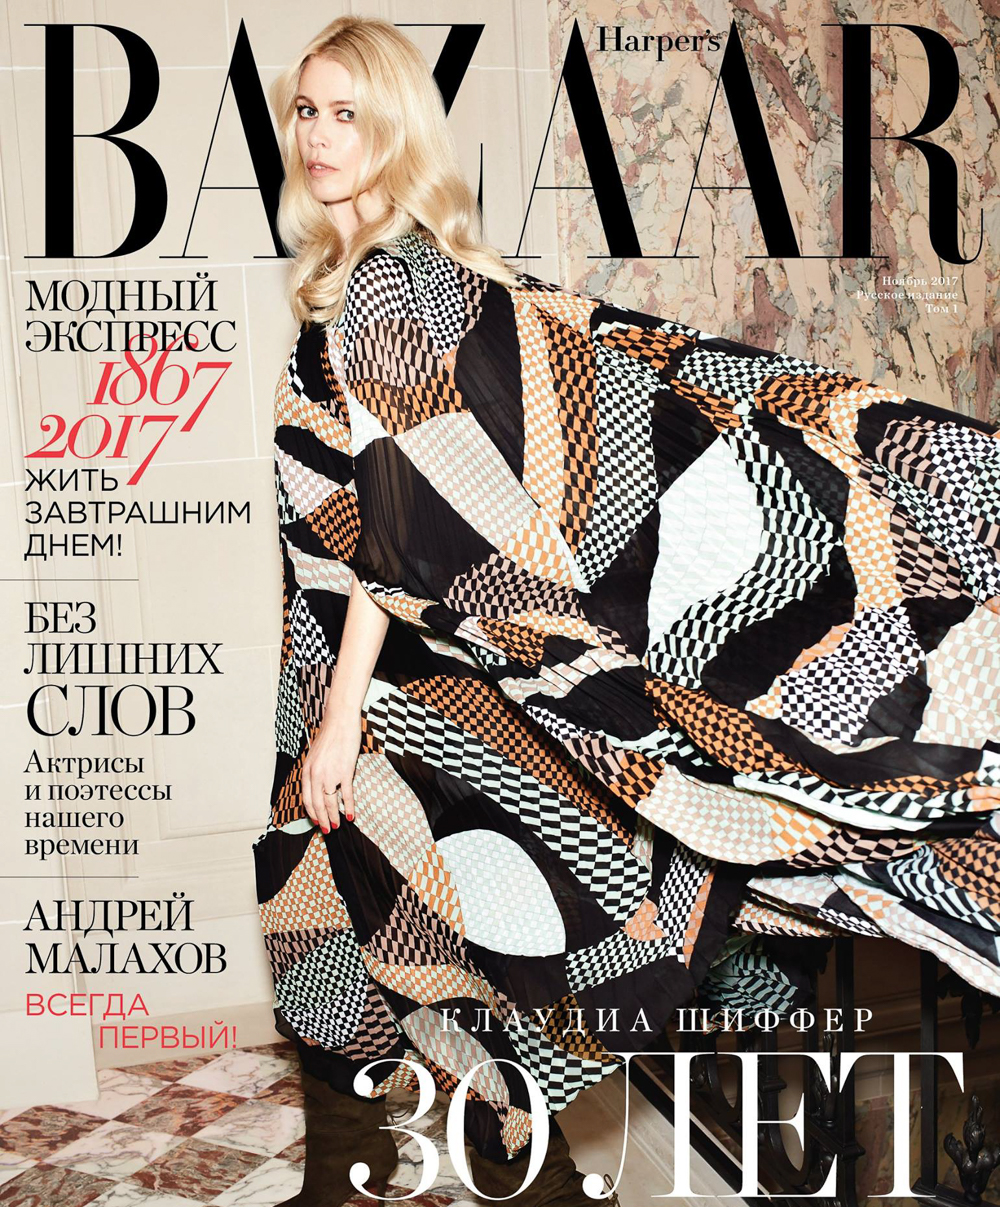 Harper’s Bazaar Russia November 2017 Claudia Schiffer by Agata Pospieszynska